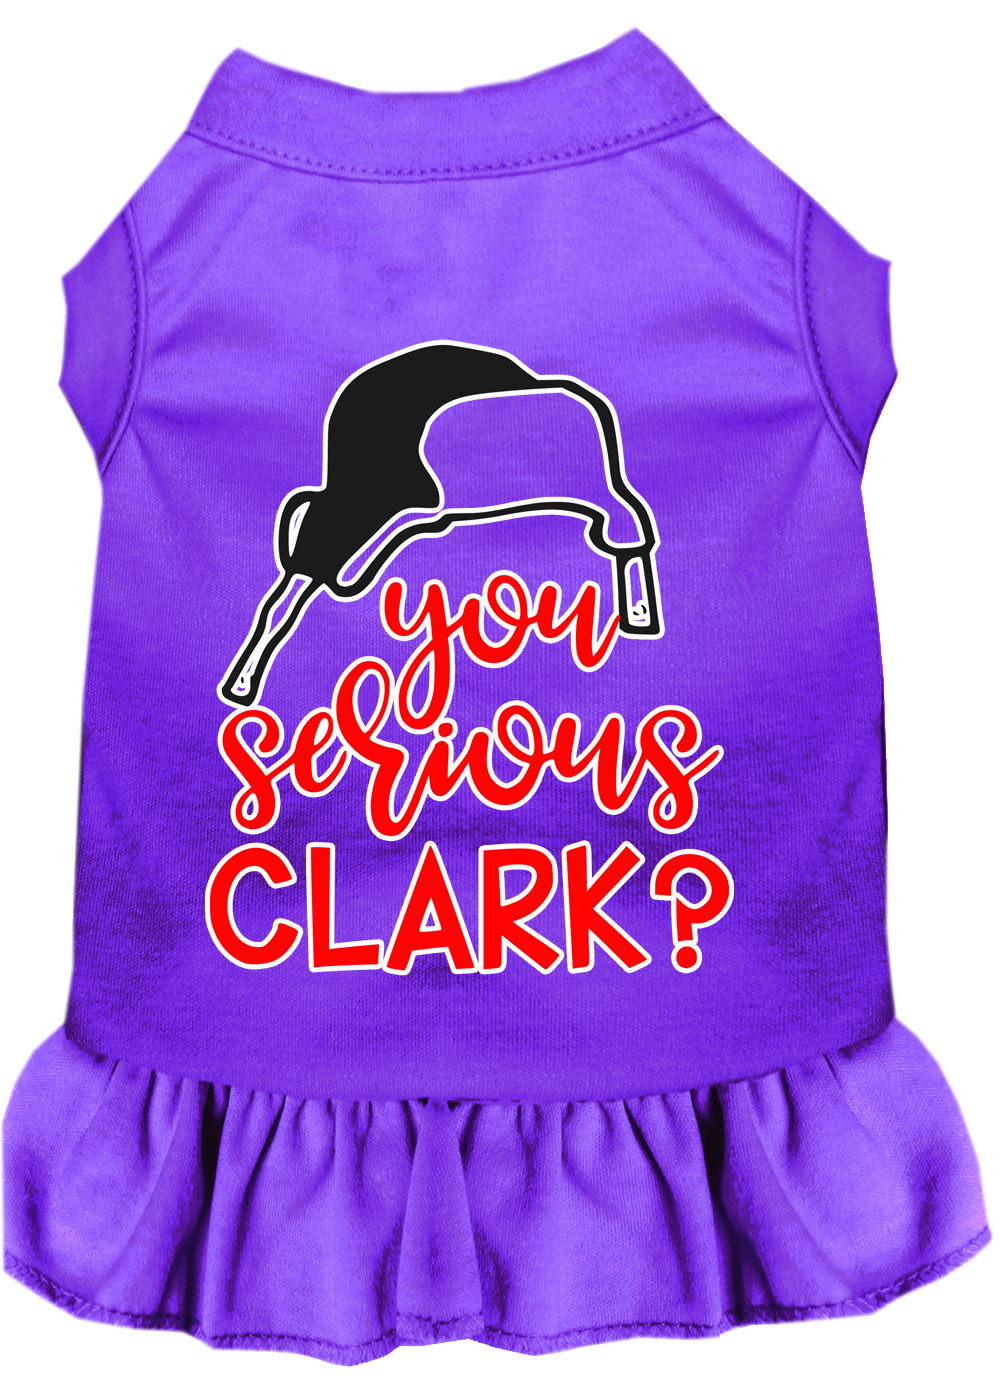 You Serious Clark? Screen Print Dog Dress Purple XL